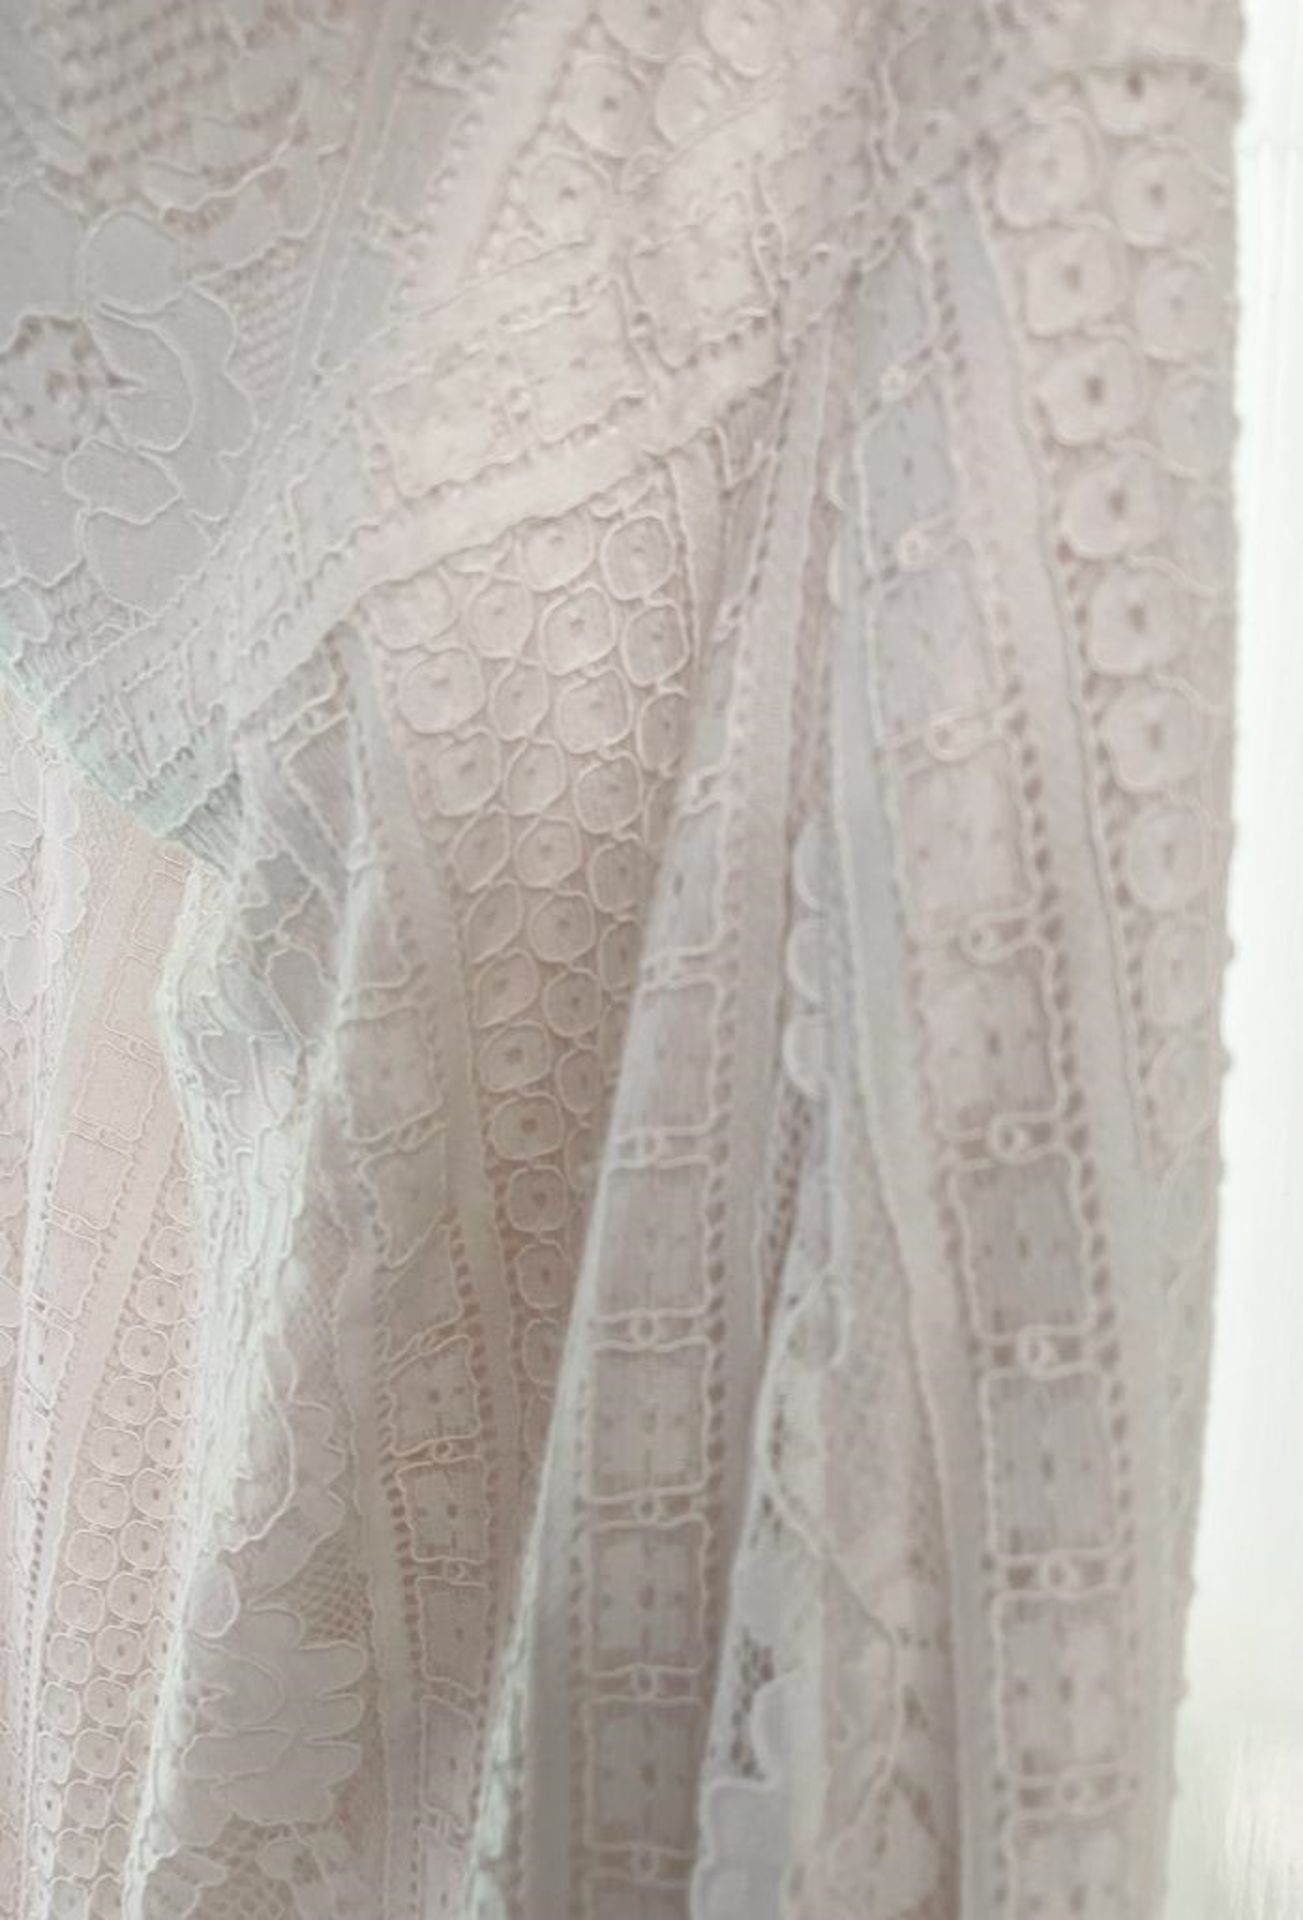 1 x LILLIAN WEST 'Ava' Designer Wedding Dress Bridal Gown - Size: UK 12 - Original RRP £1,450 - Image 5 of 16